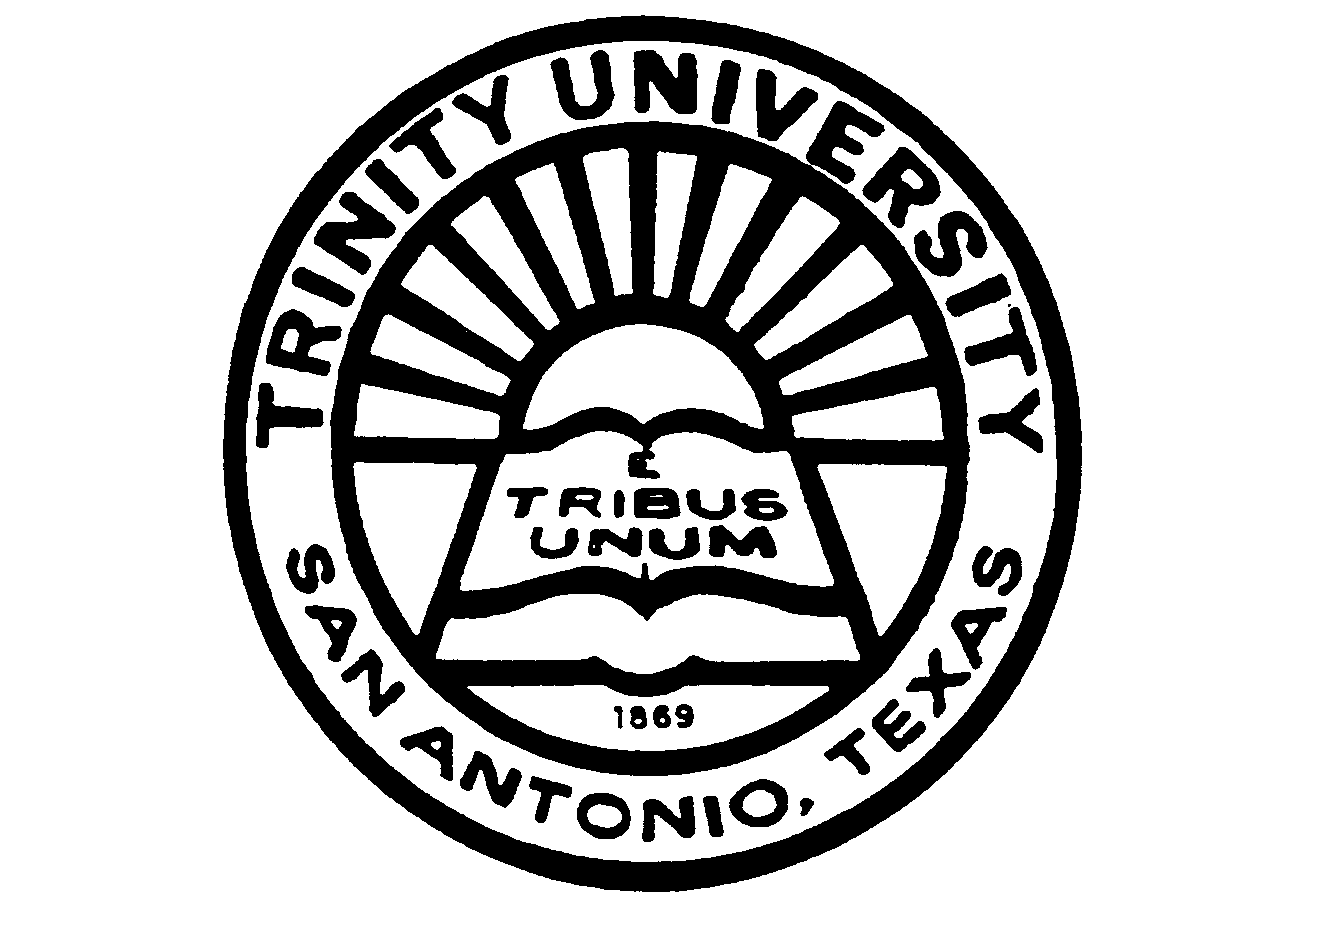  TRINITY UNIVERSITY E TRIBUS UNUM 1869 SAN ANTONIA, TEXAS